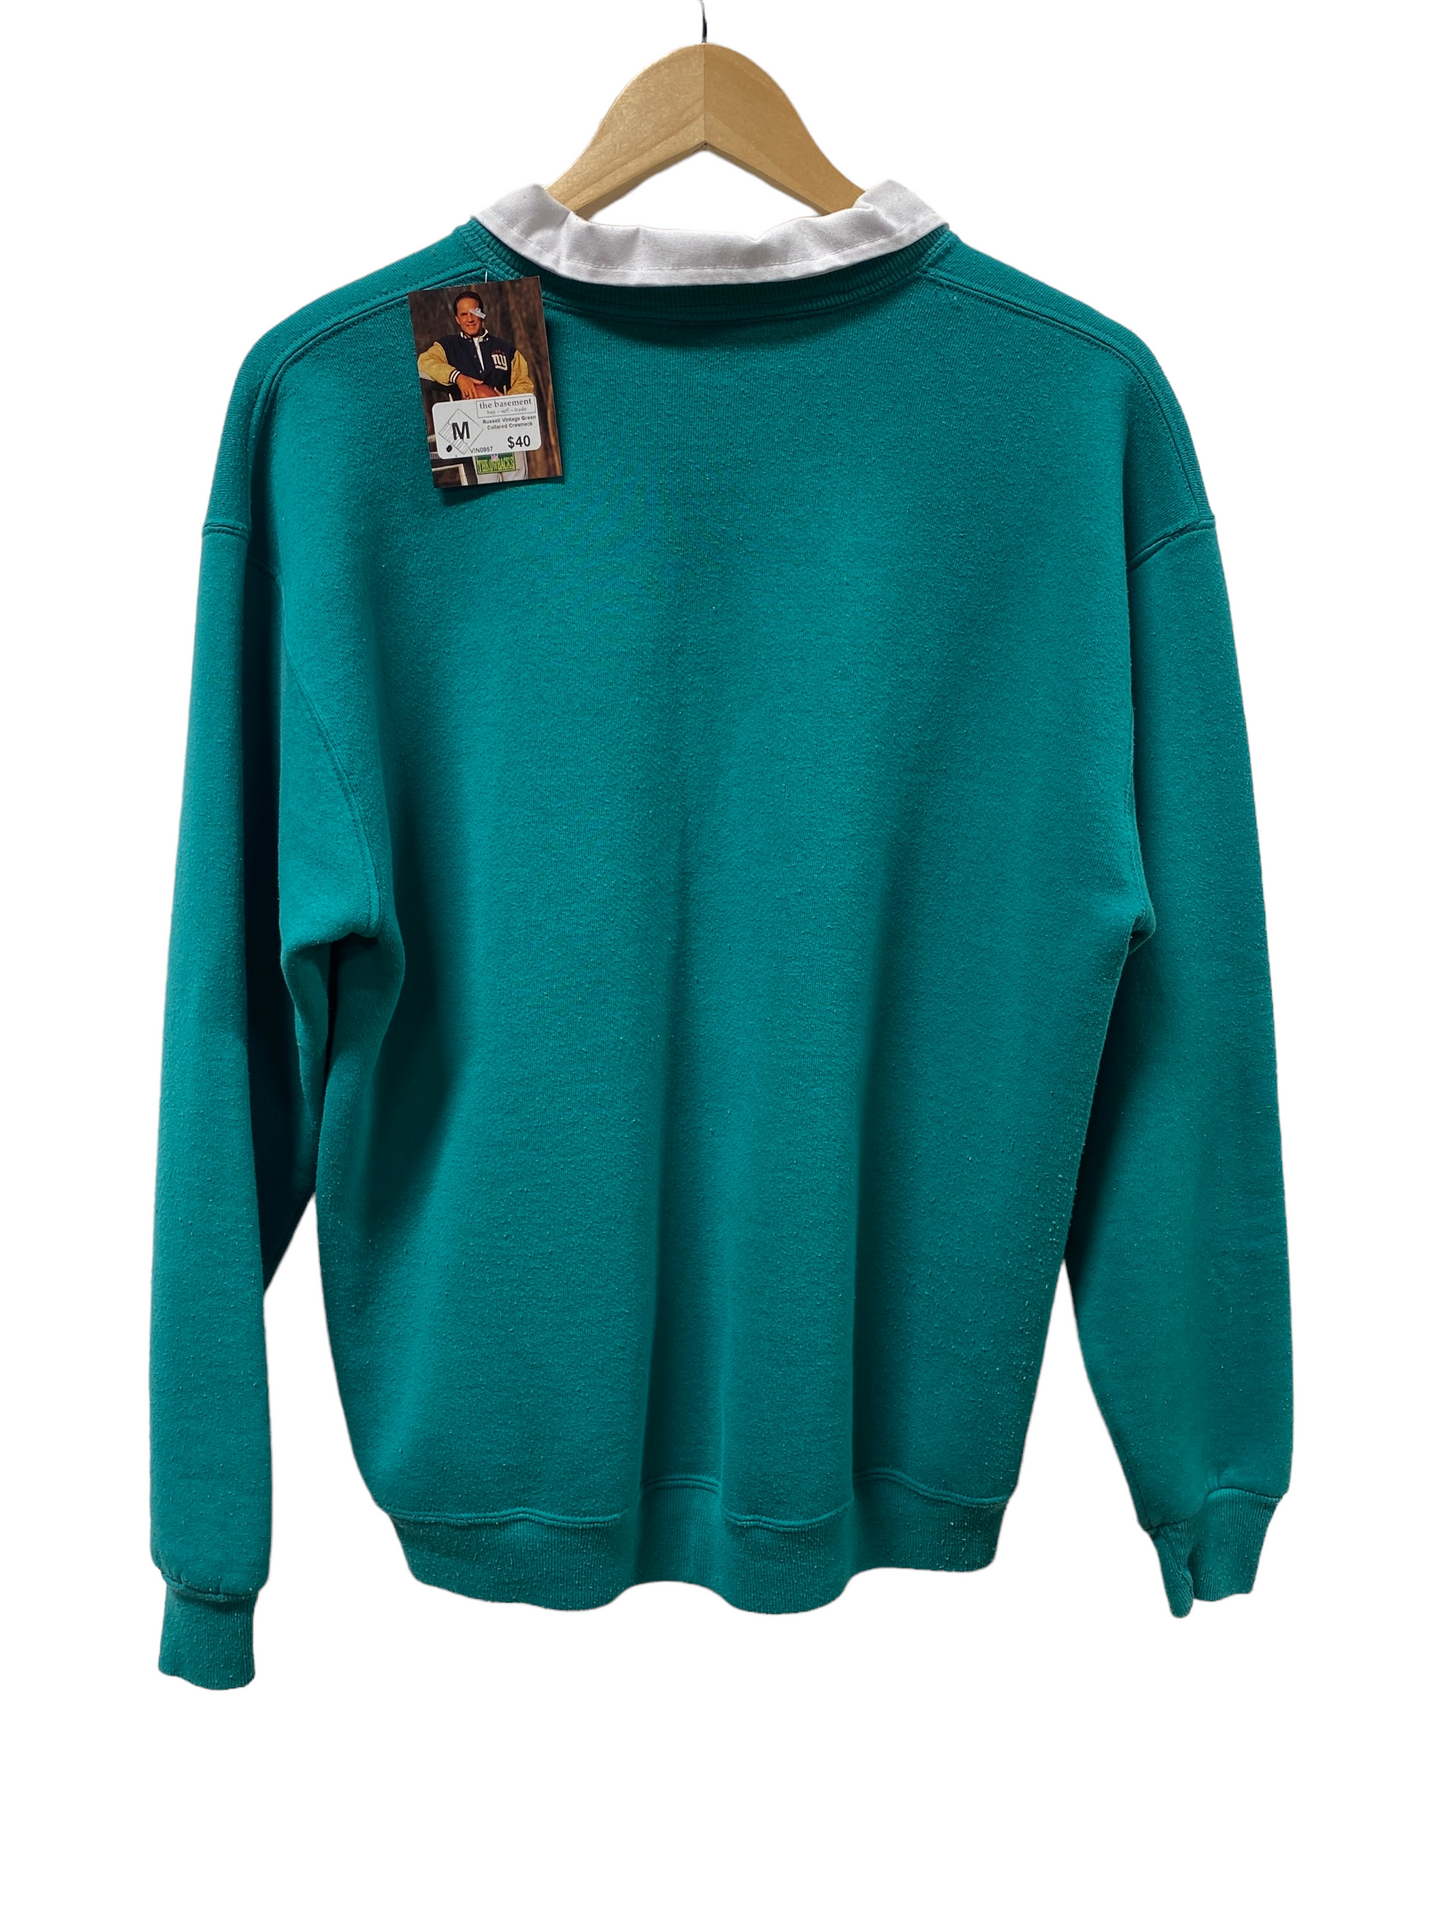 Vintage 90's Russell Athletics Collared Green Blank Crewneck Sweater Size Medium